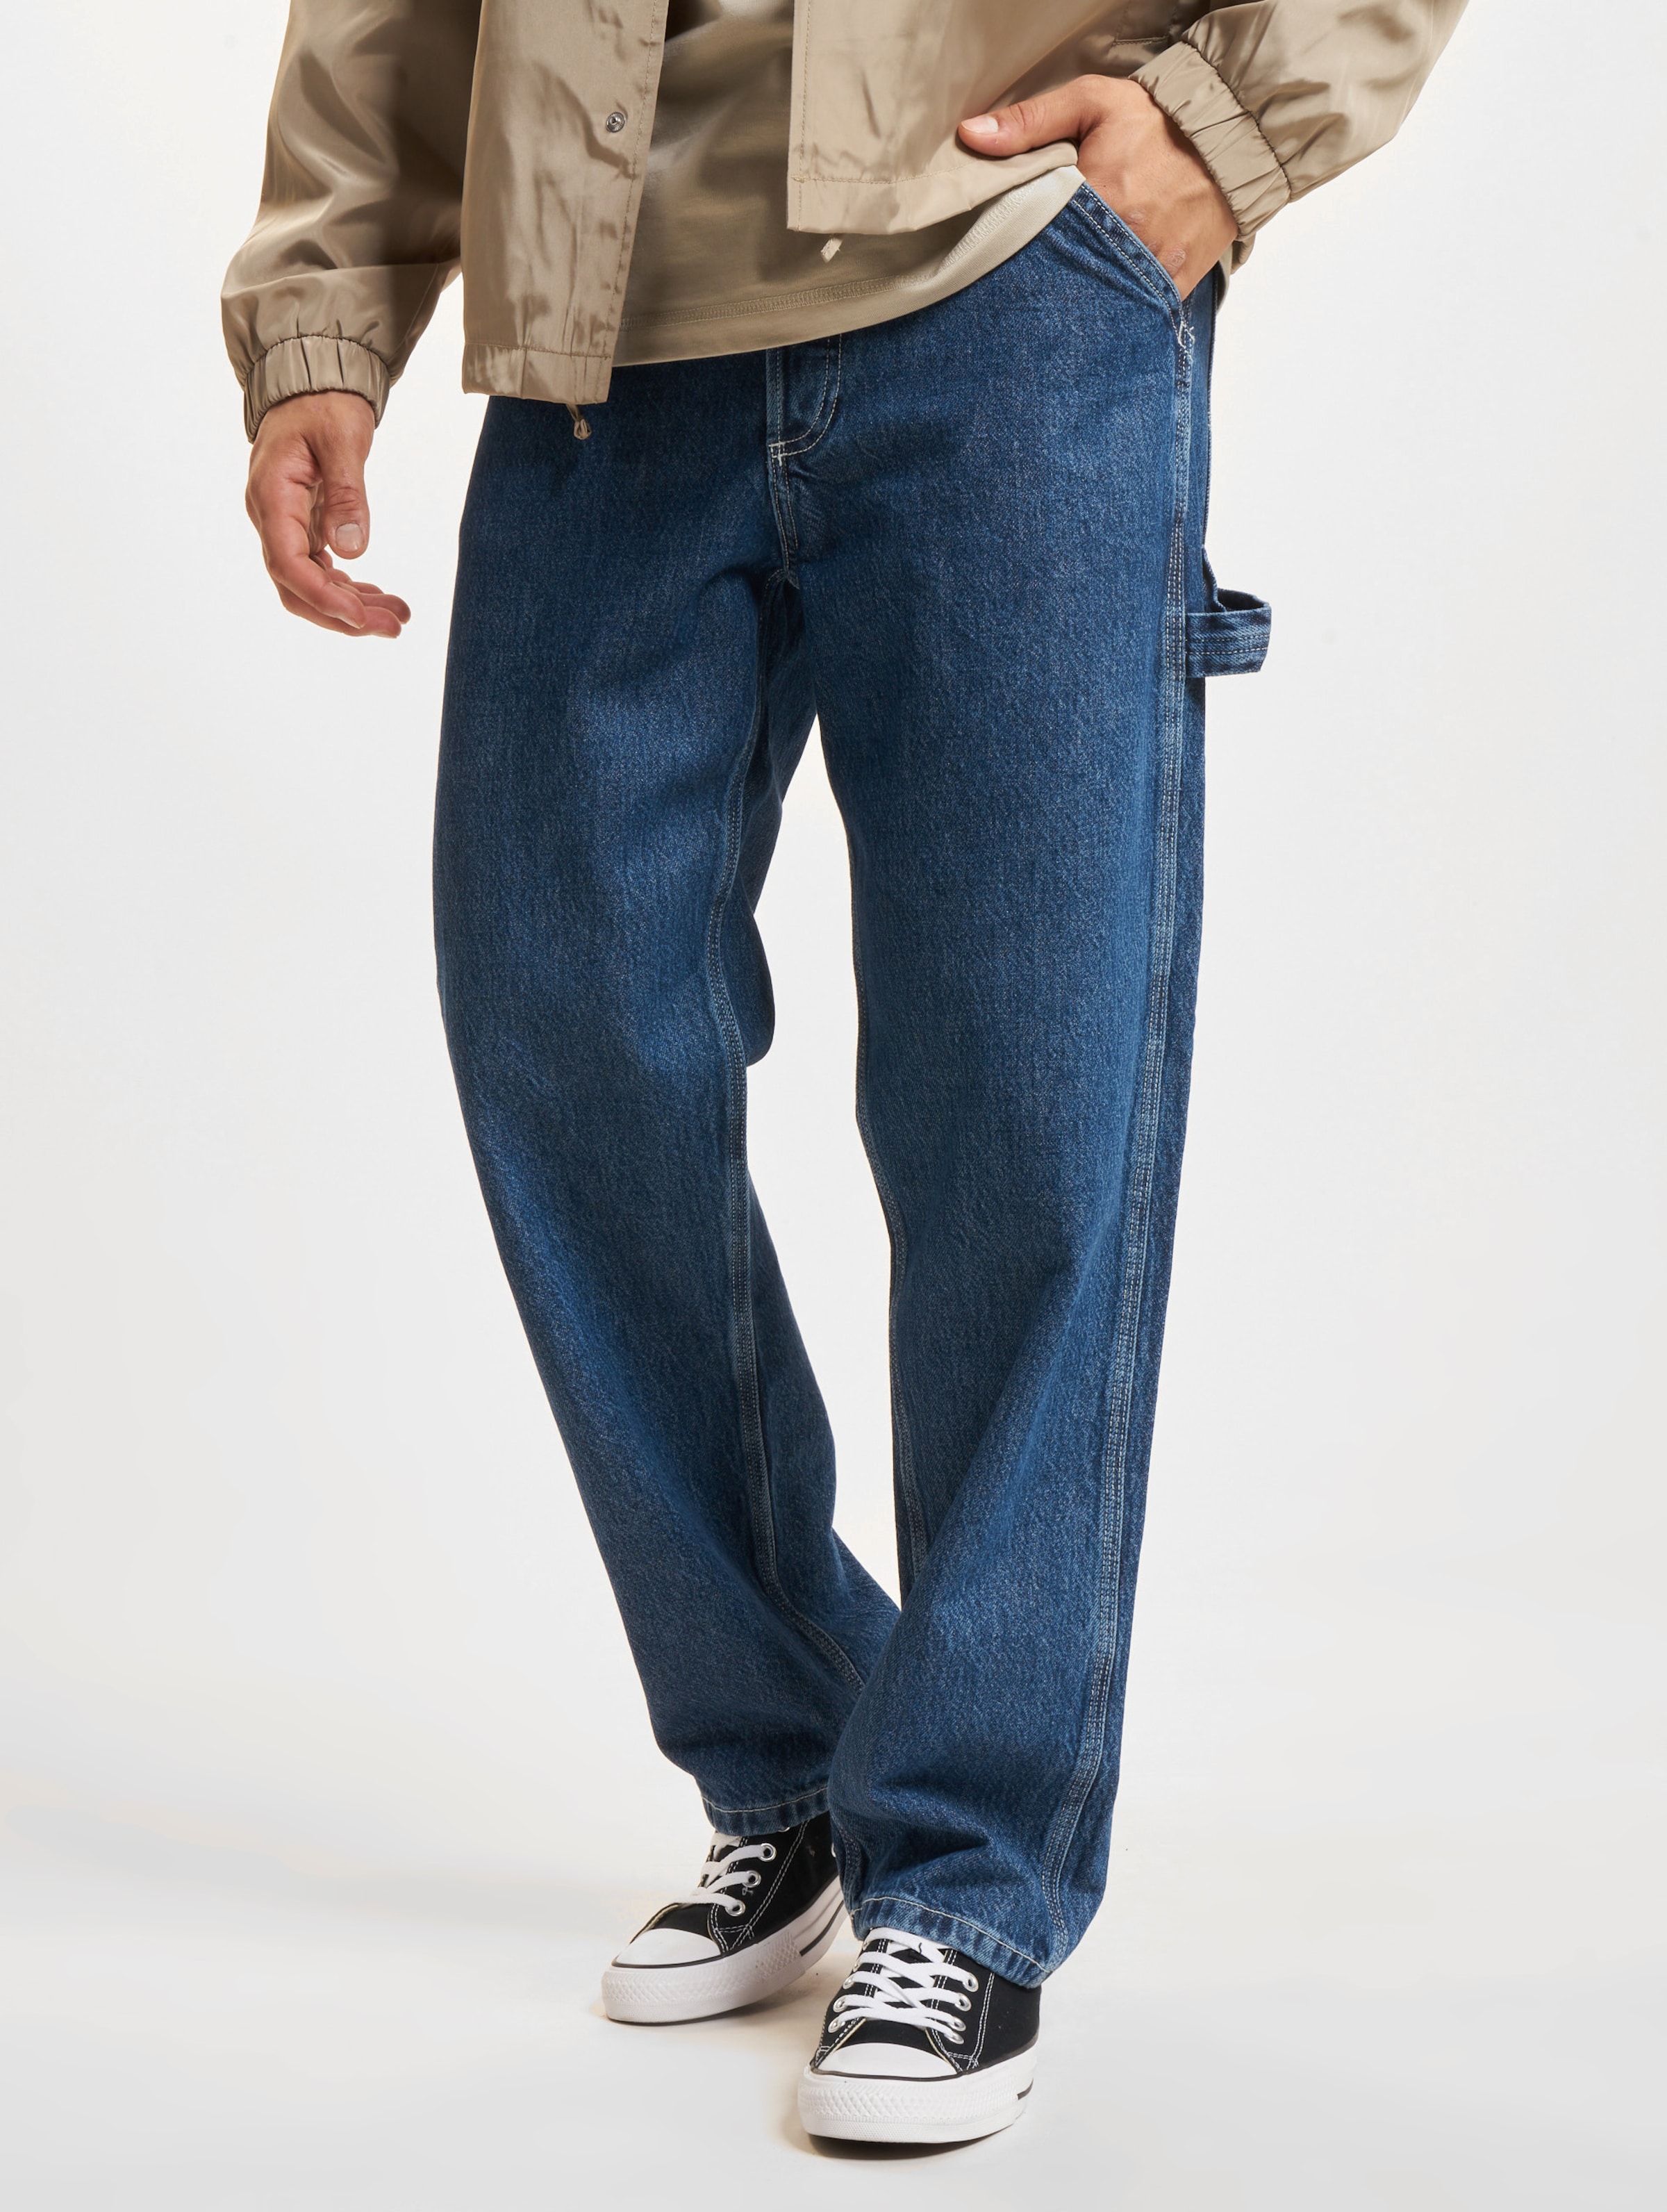 Jack & Jones Eddie Carpenter SBD 316 Loose Fit Jeans Mannen op kleur blauw, Maat 2832